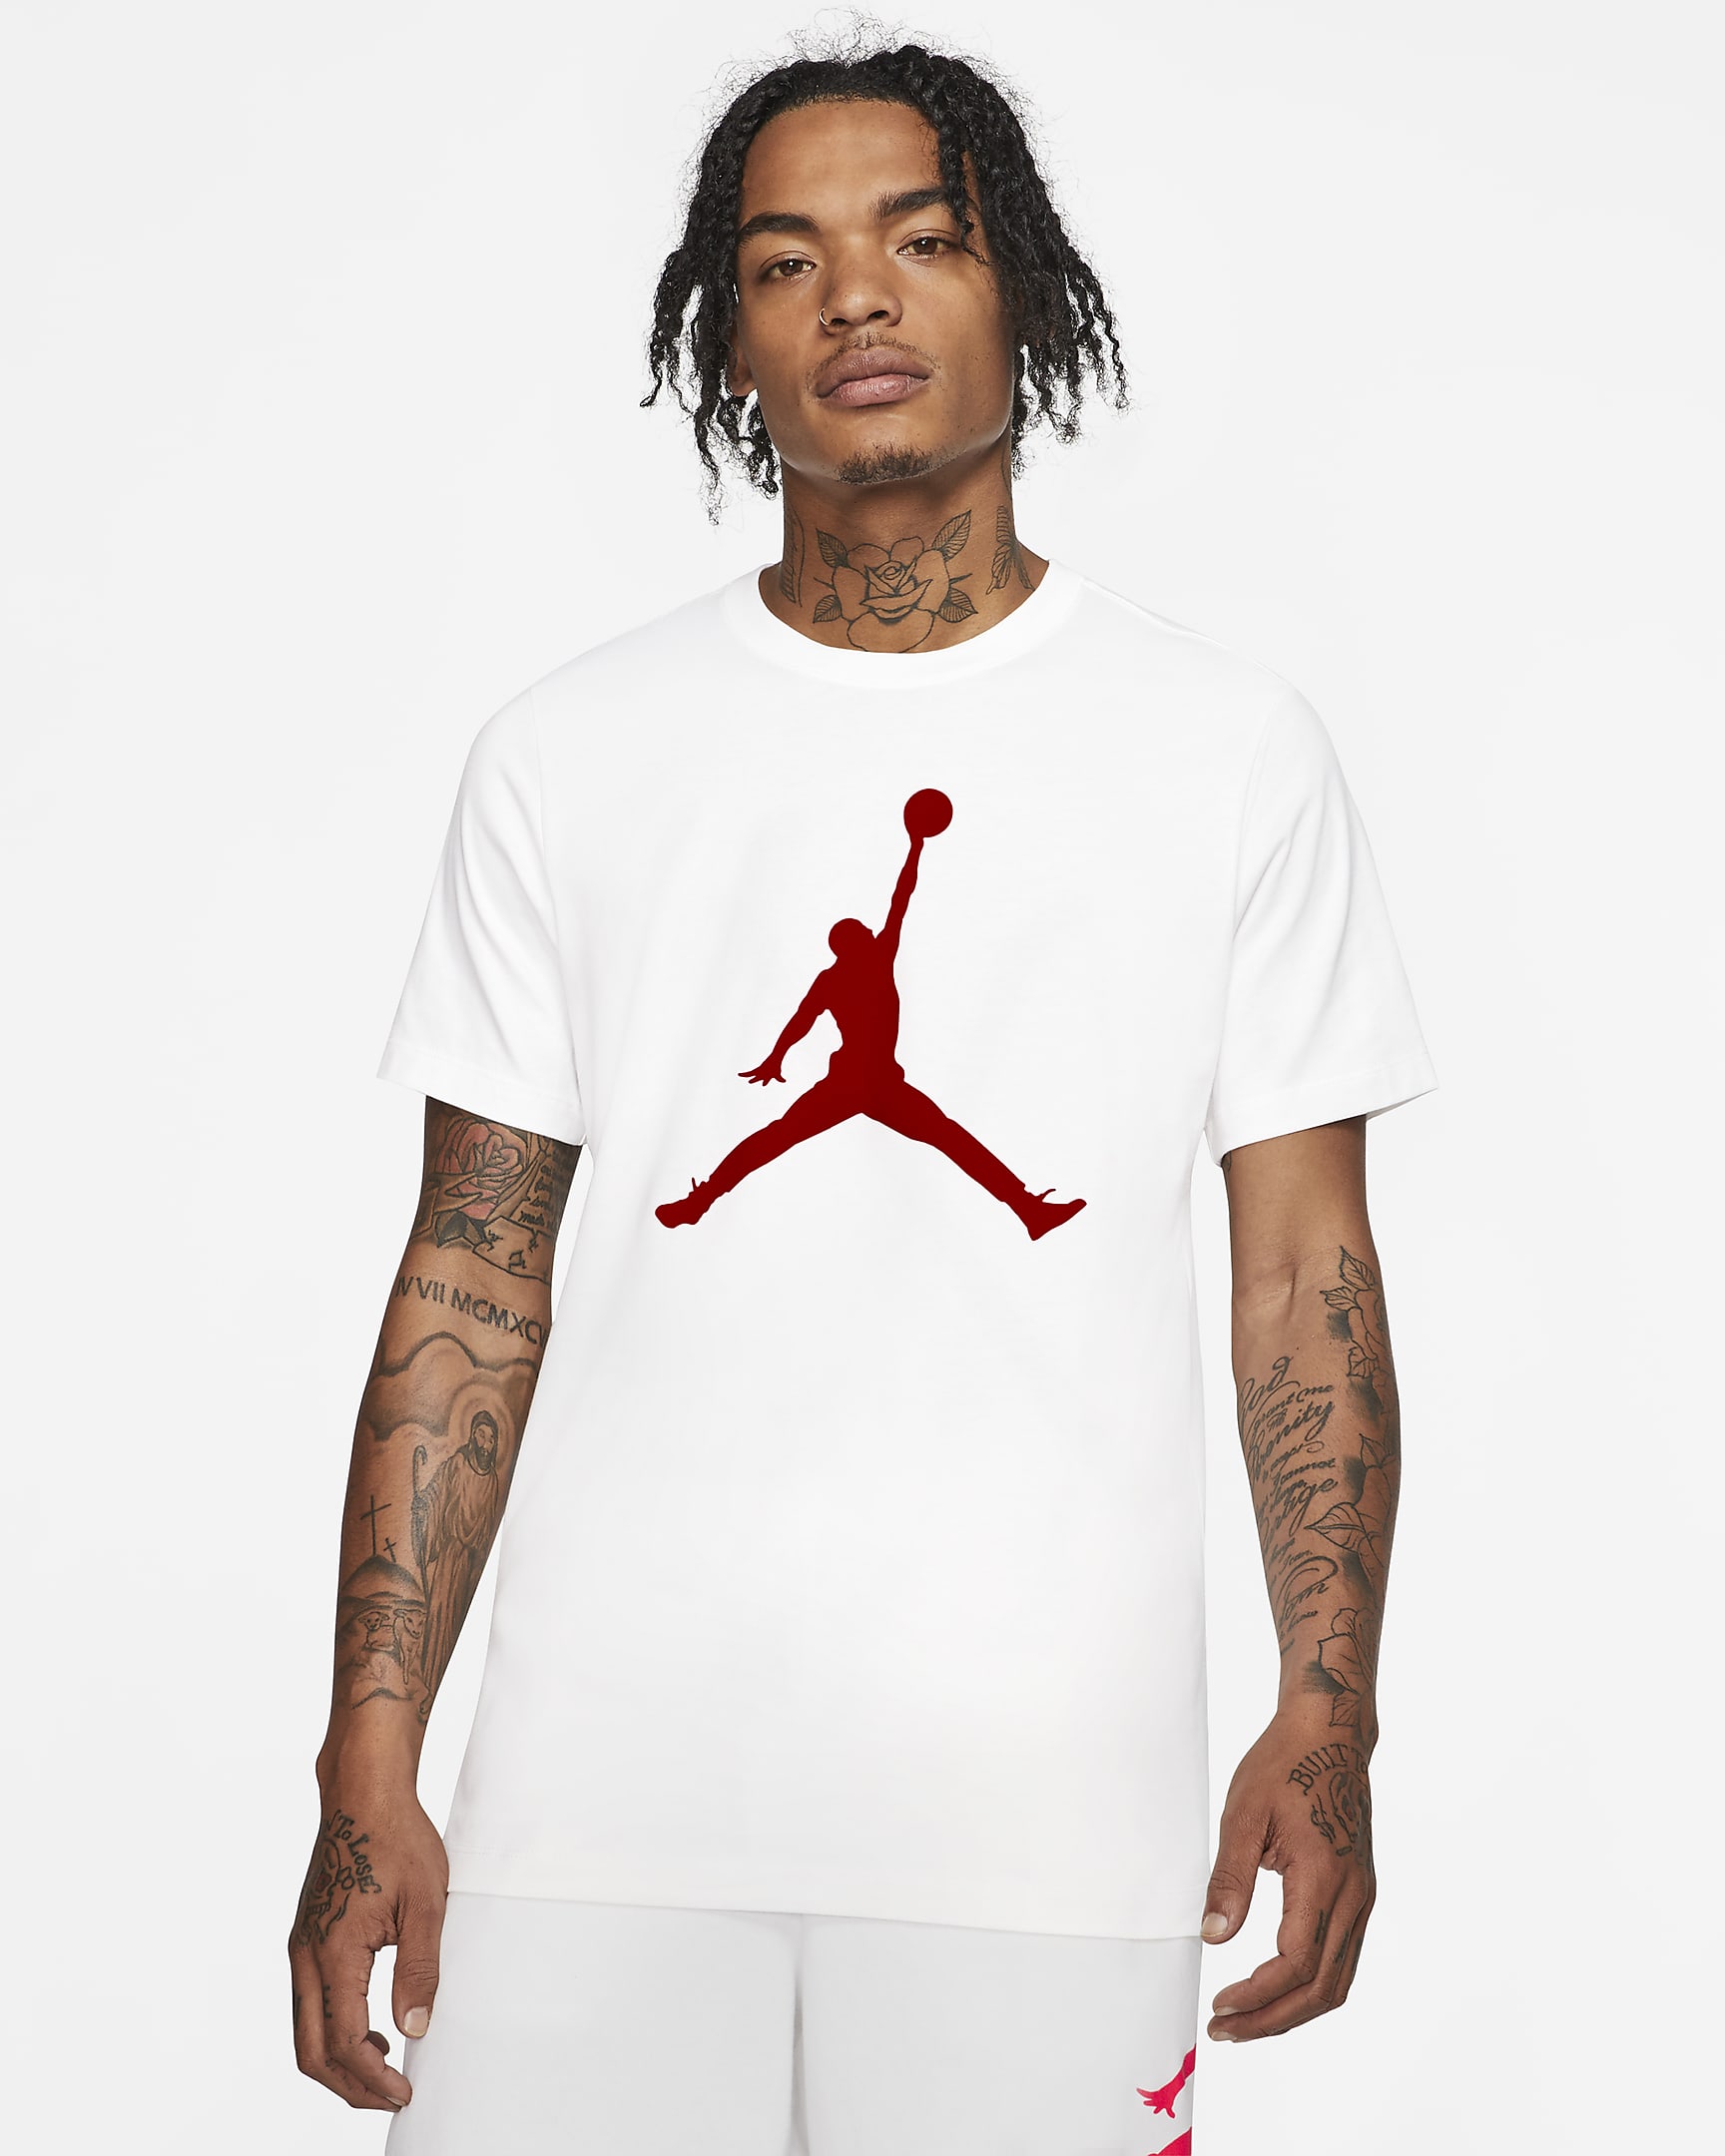 Air Jordan 12 Twist Shirts Hats Clothing Outfits to Match